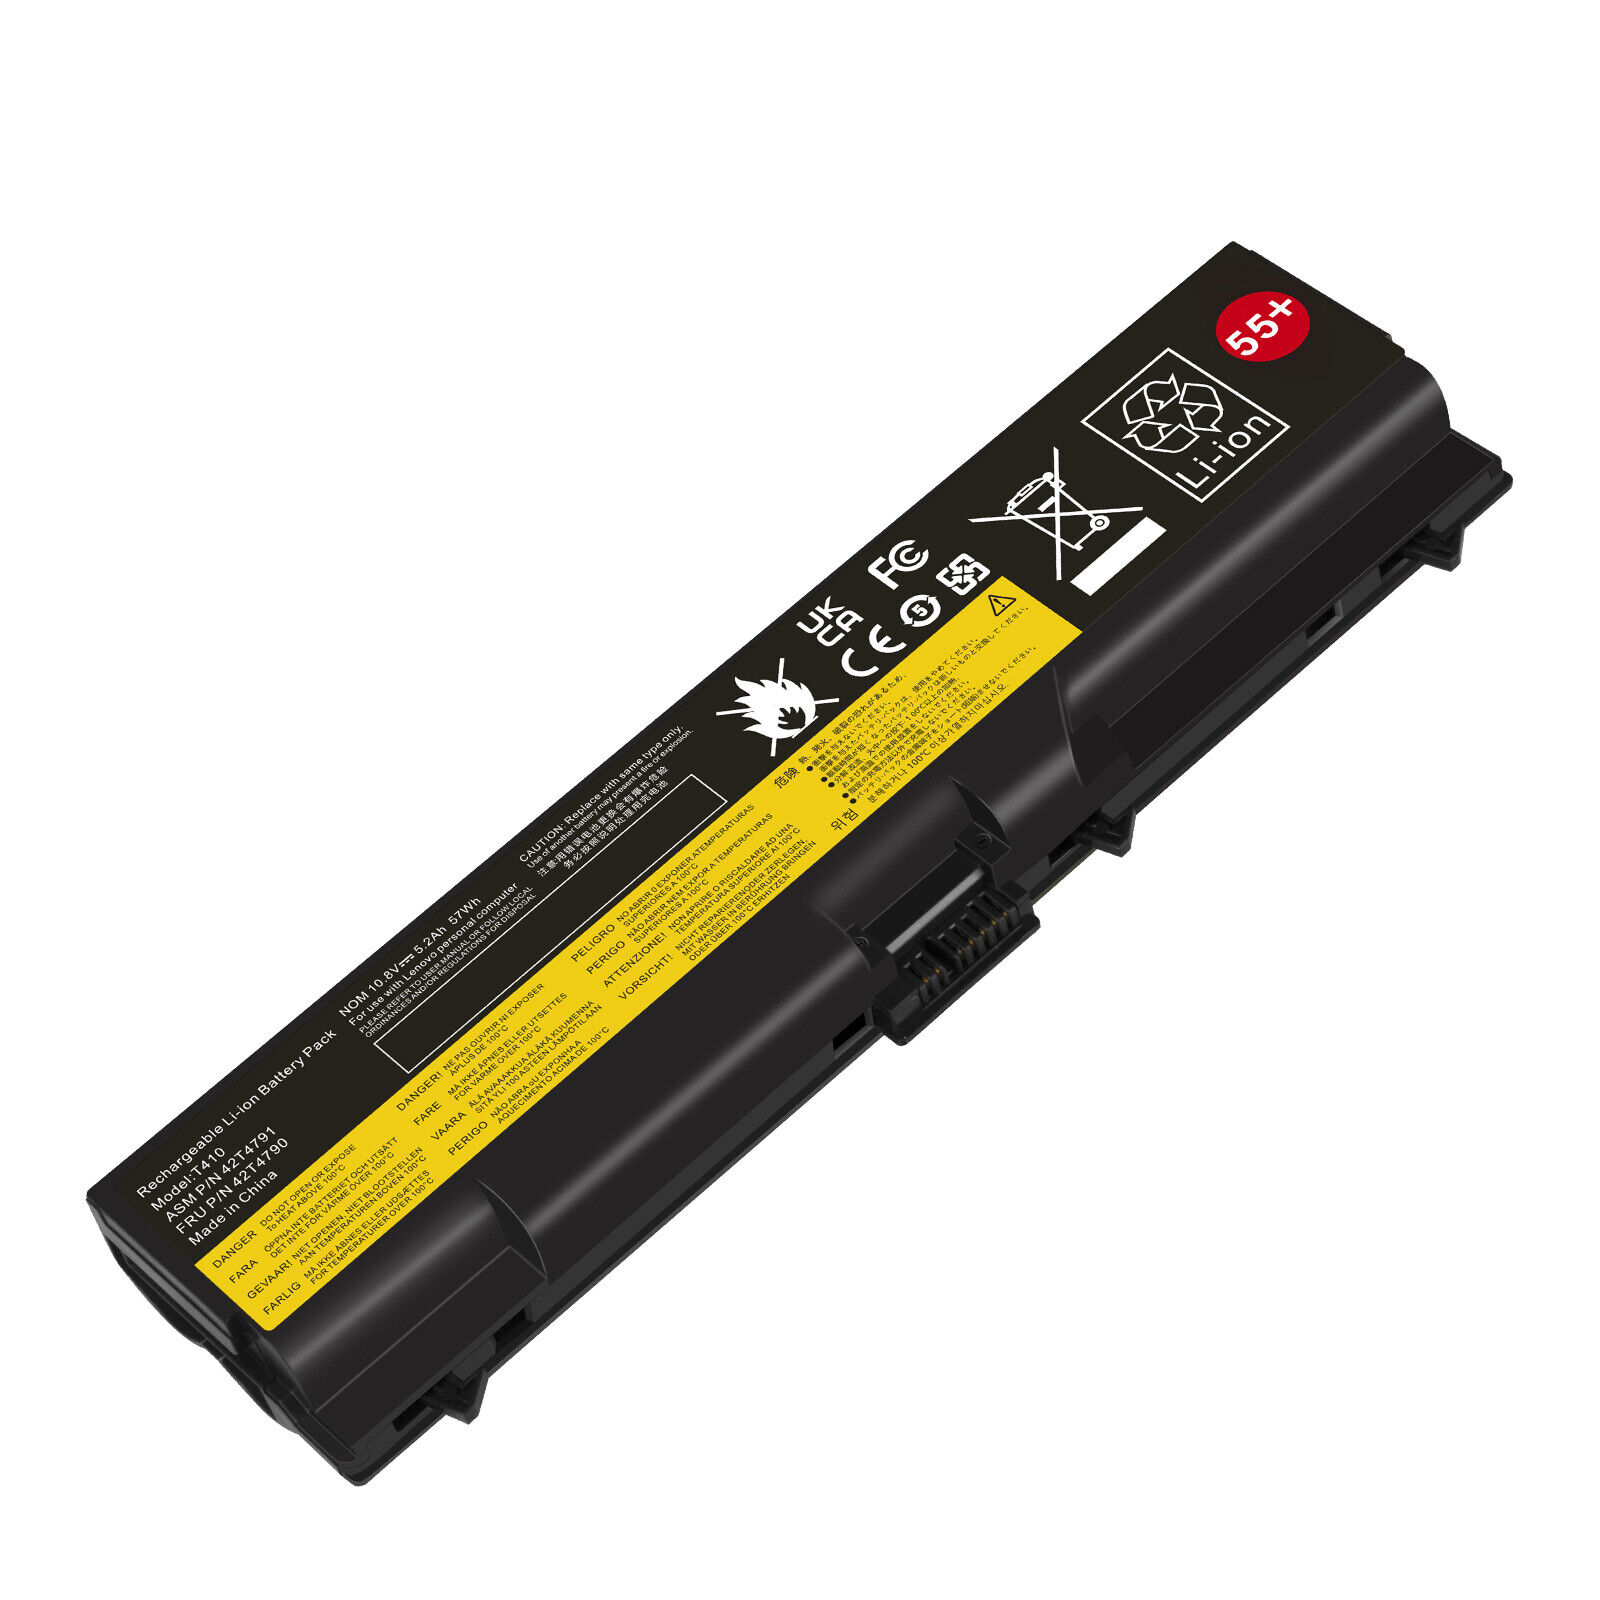 Battery for Lenovo ThinkPad T410 T420 T510 T520 SL410 SL510 E420 E425 E520 6/9Ce